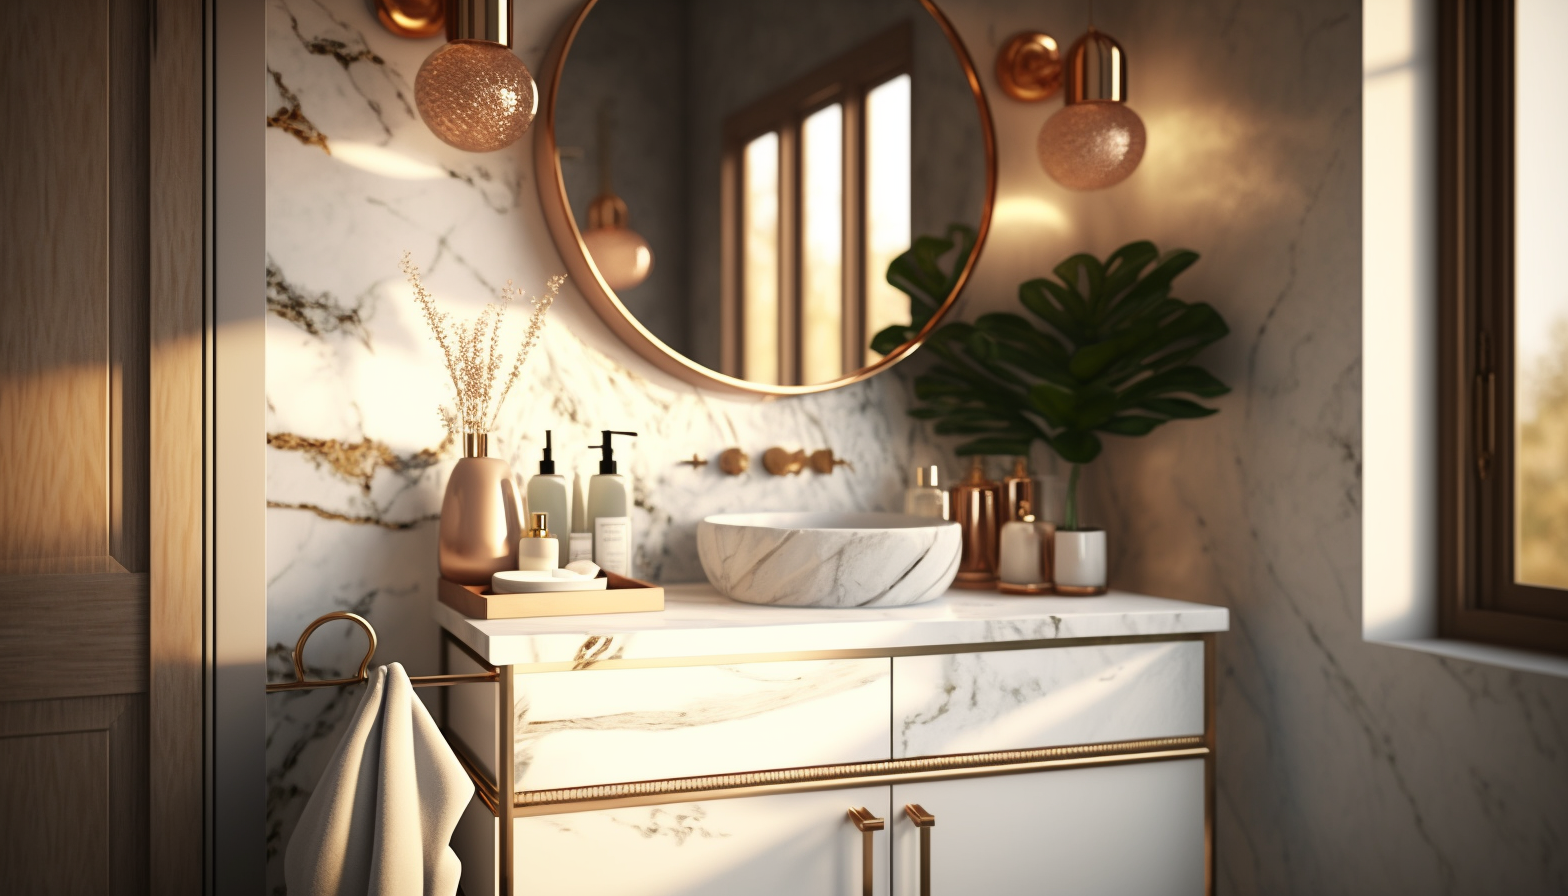 DIY Bathroom Vanity Ideas